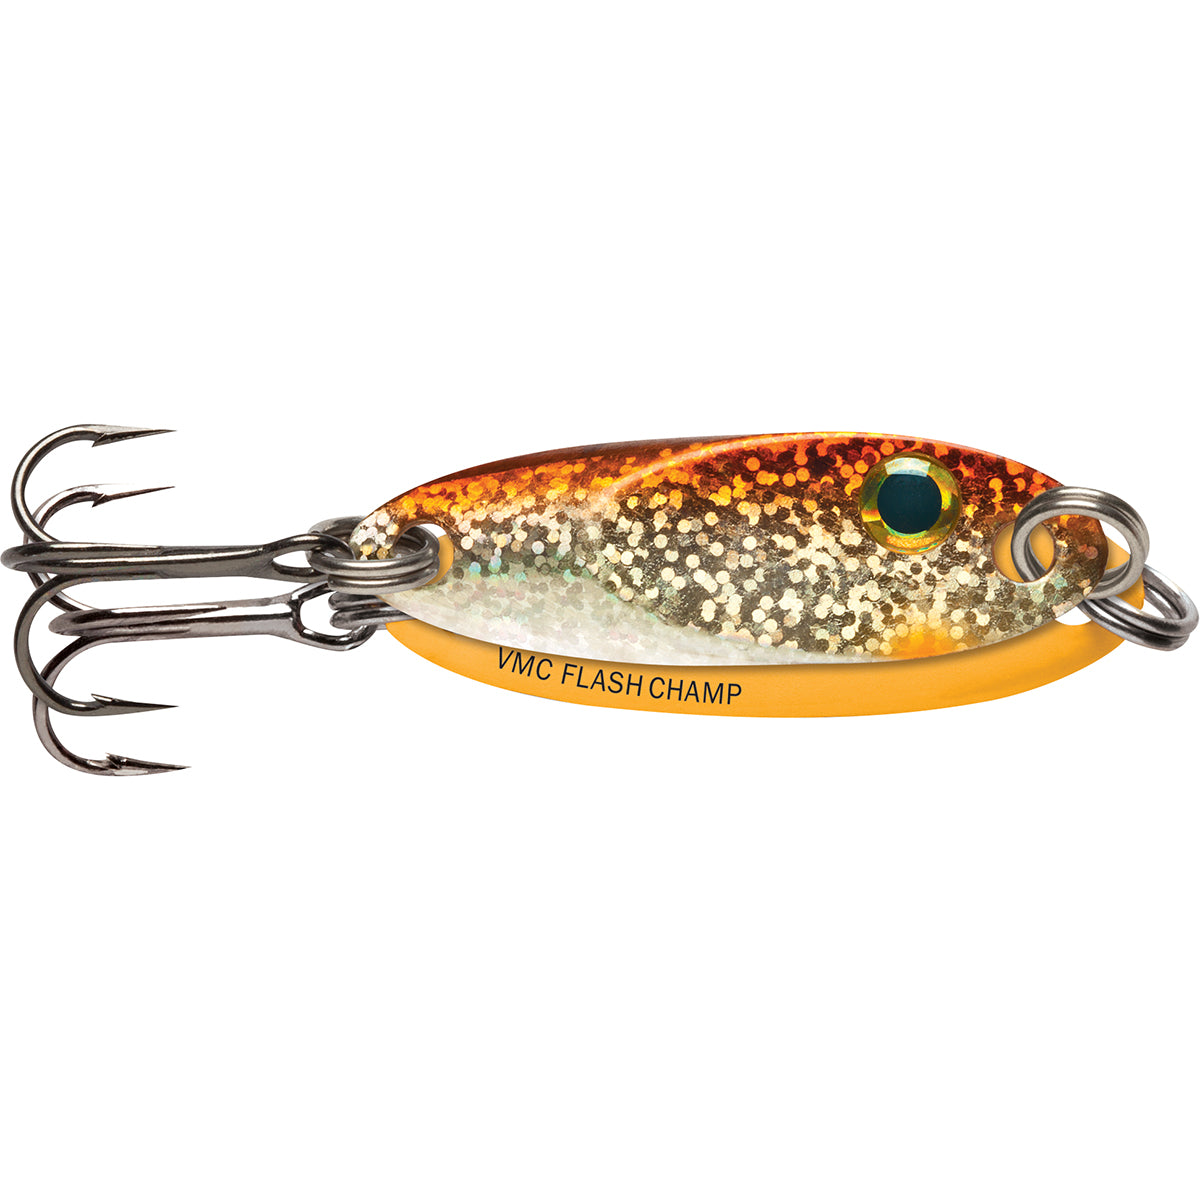 VMC 1/32 oz. Flash Champ Spoon Fishing Lure - Gold Shiner VMC